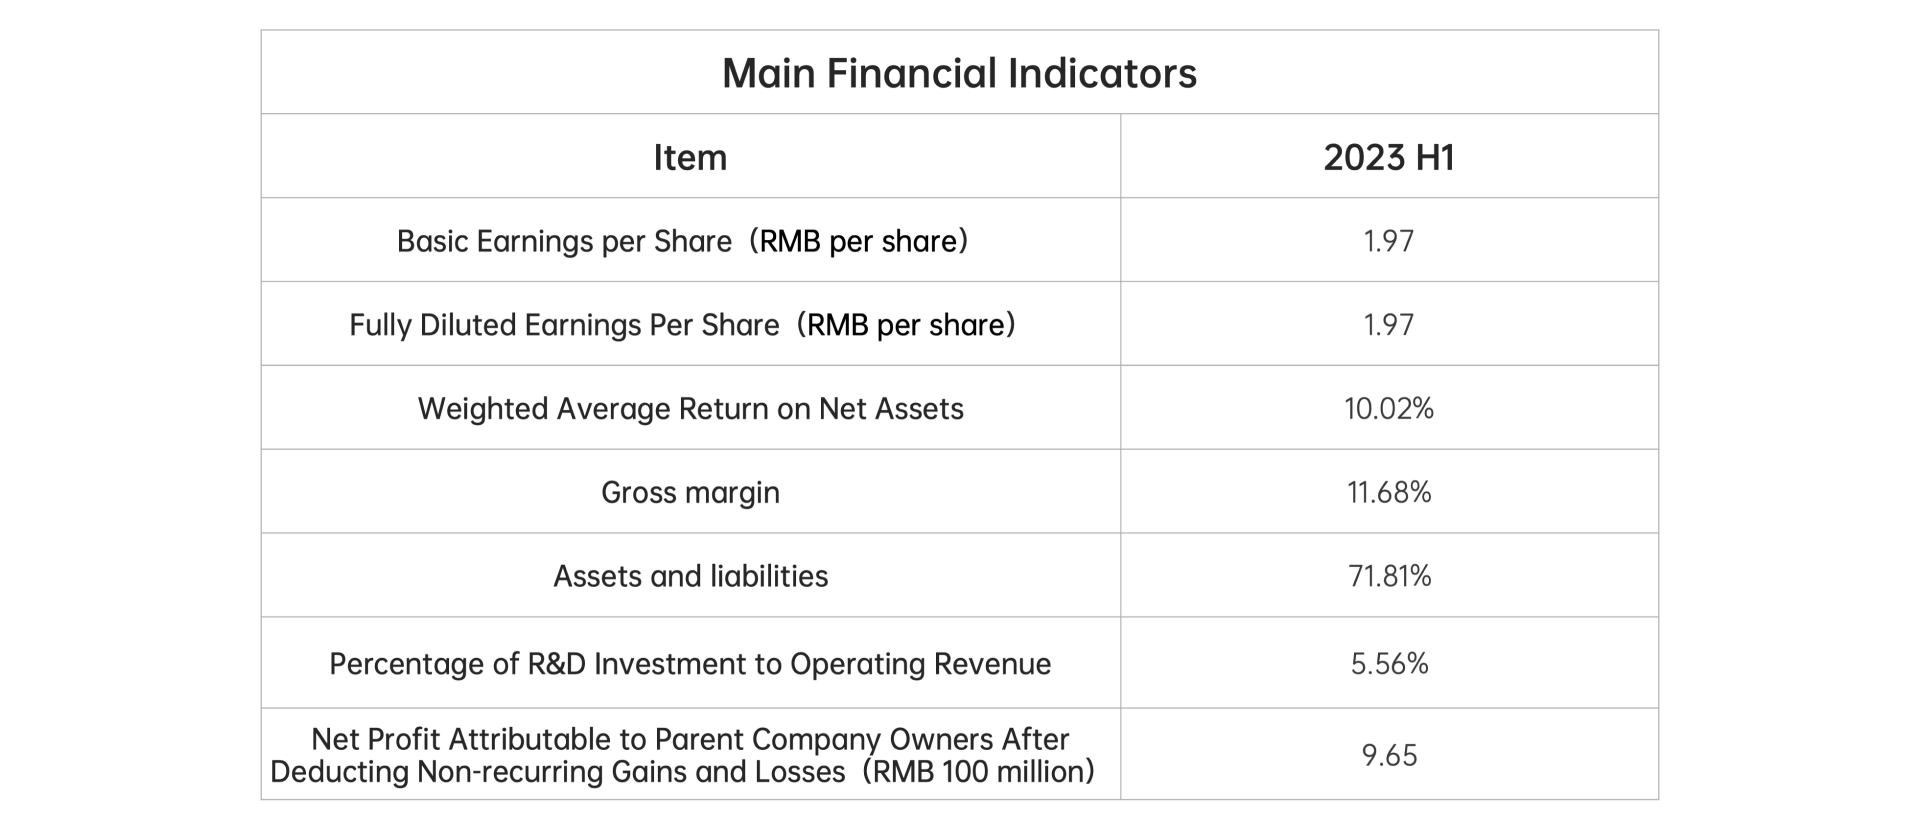 Main Financial Indicators